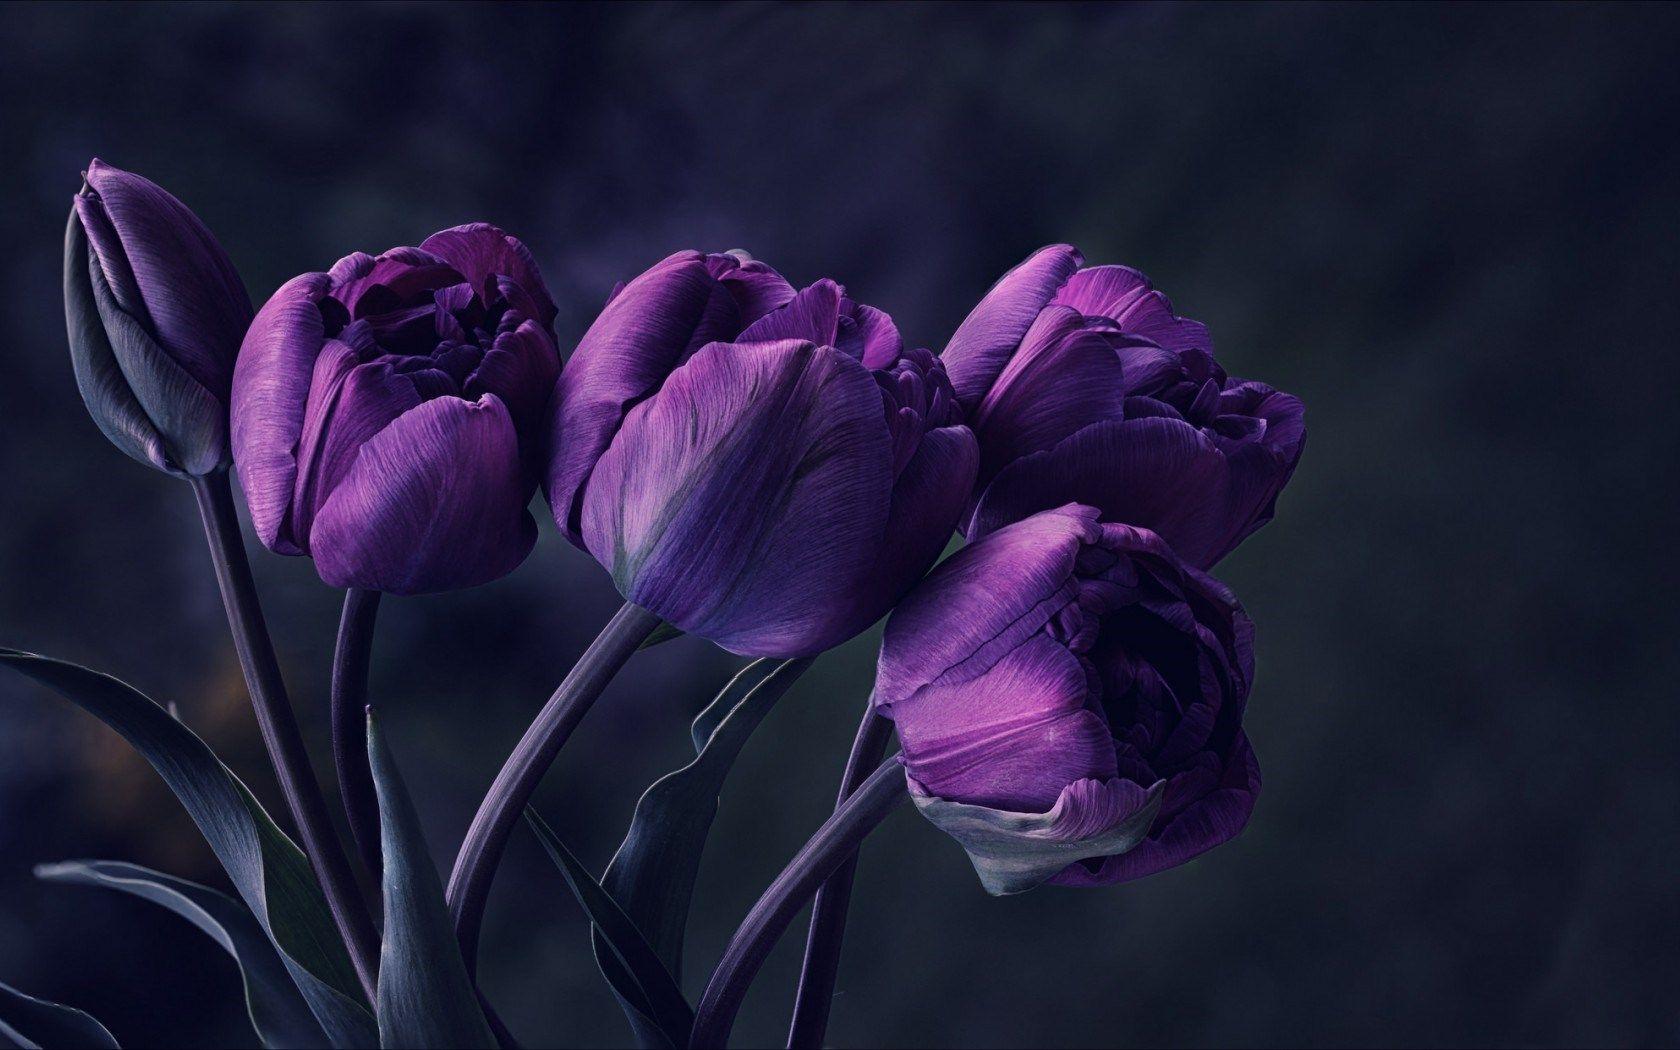 Mystery Flower Night Dark Tulips Purple Petals Photo